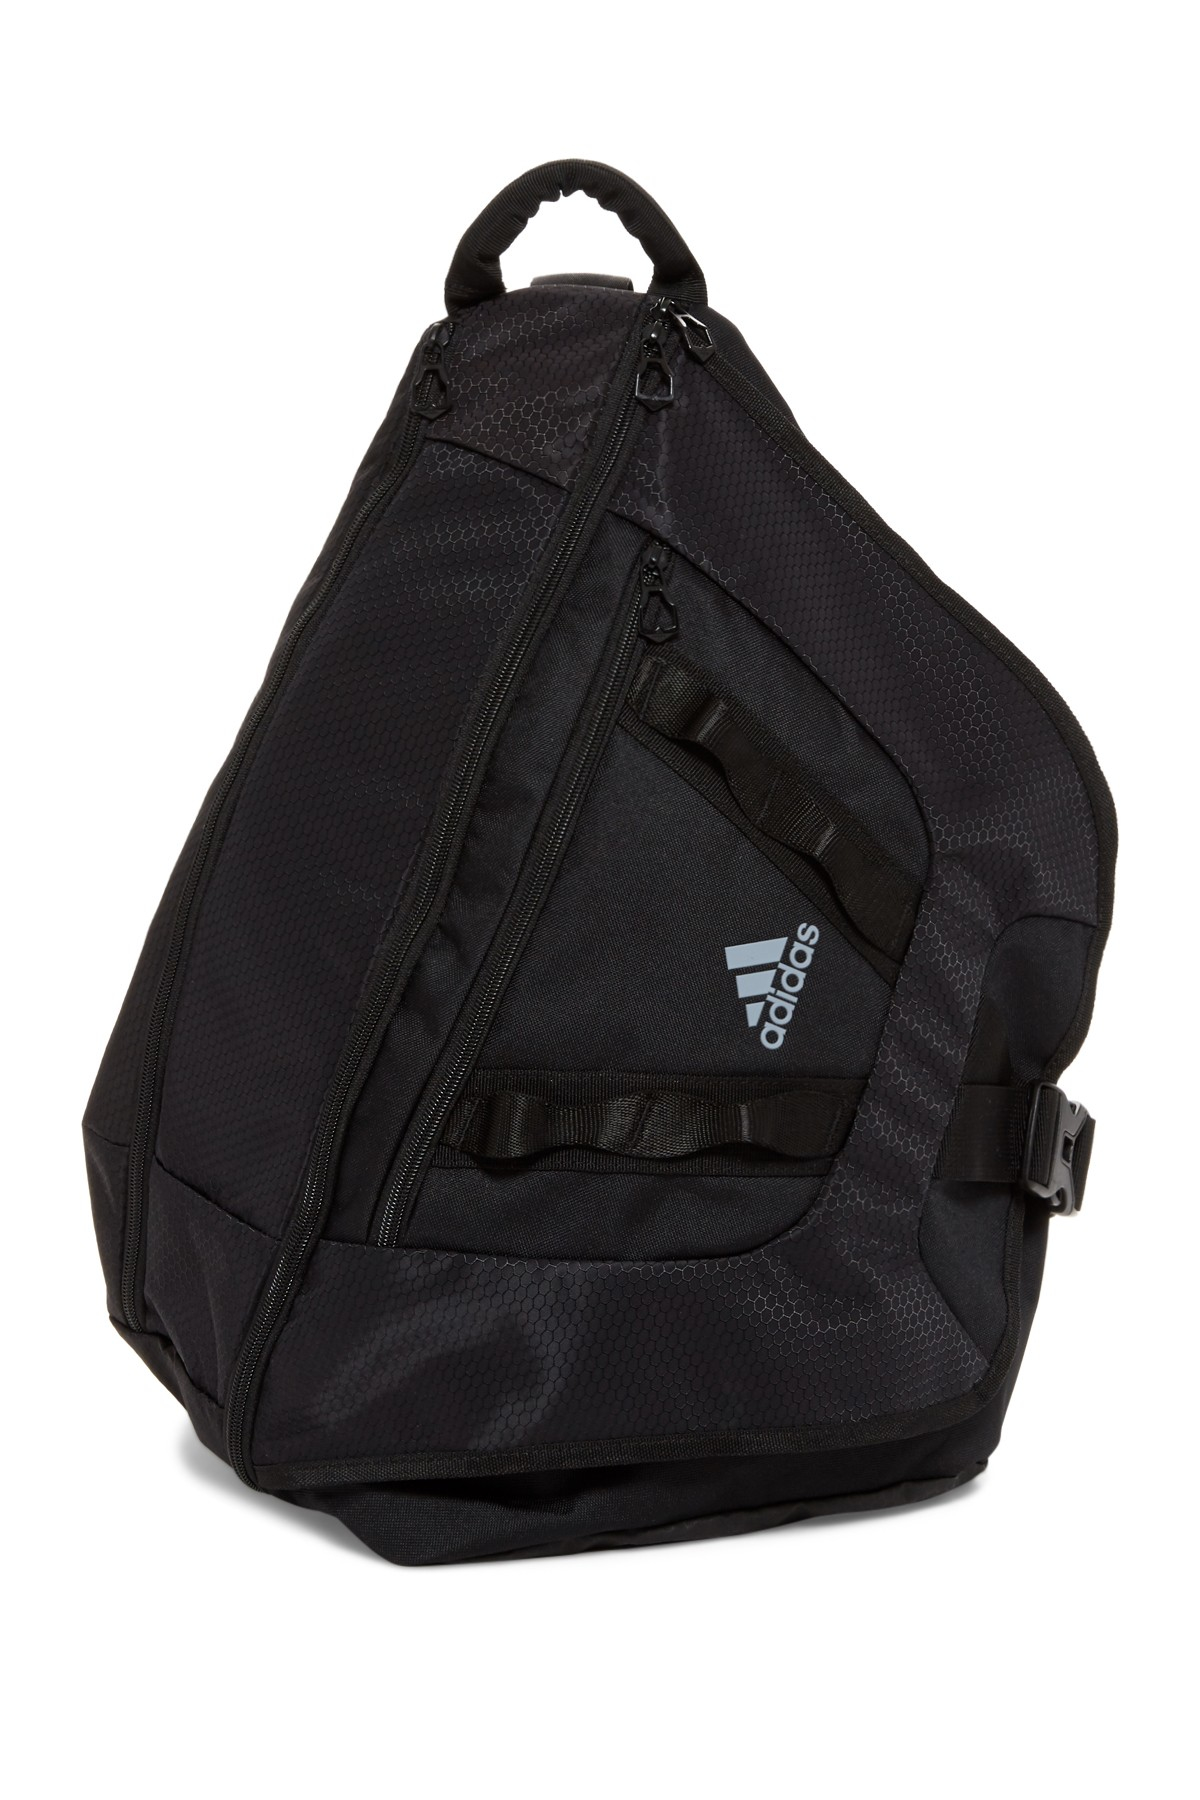 Adidas Single Strap Backpack :: Keweenaw Bay Indian Community